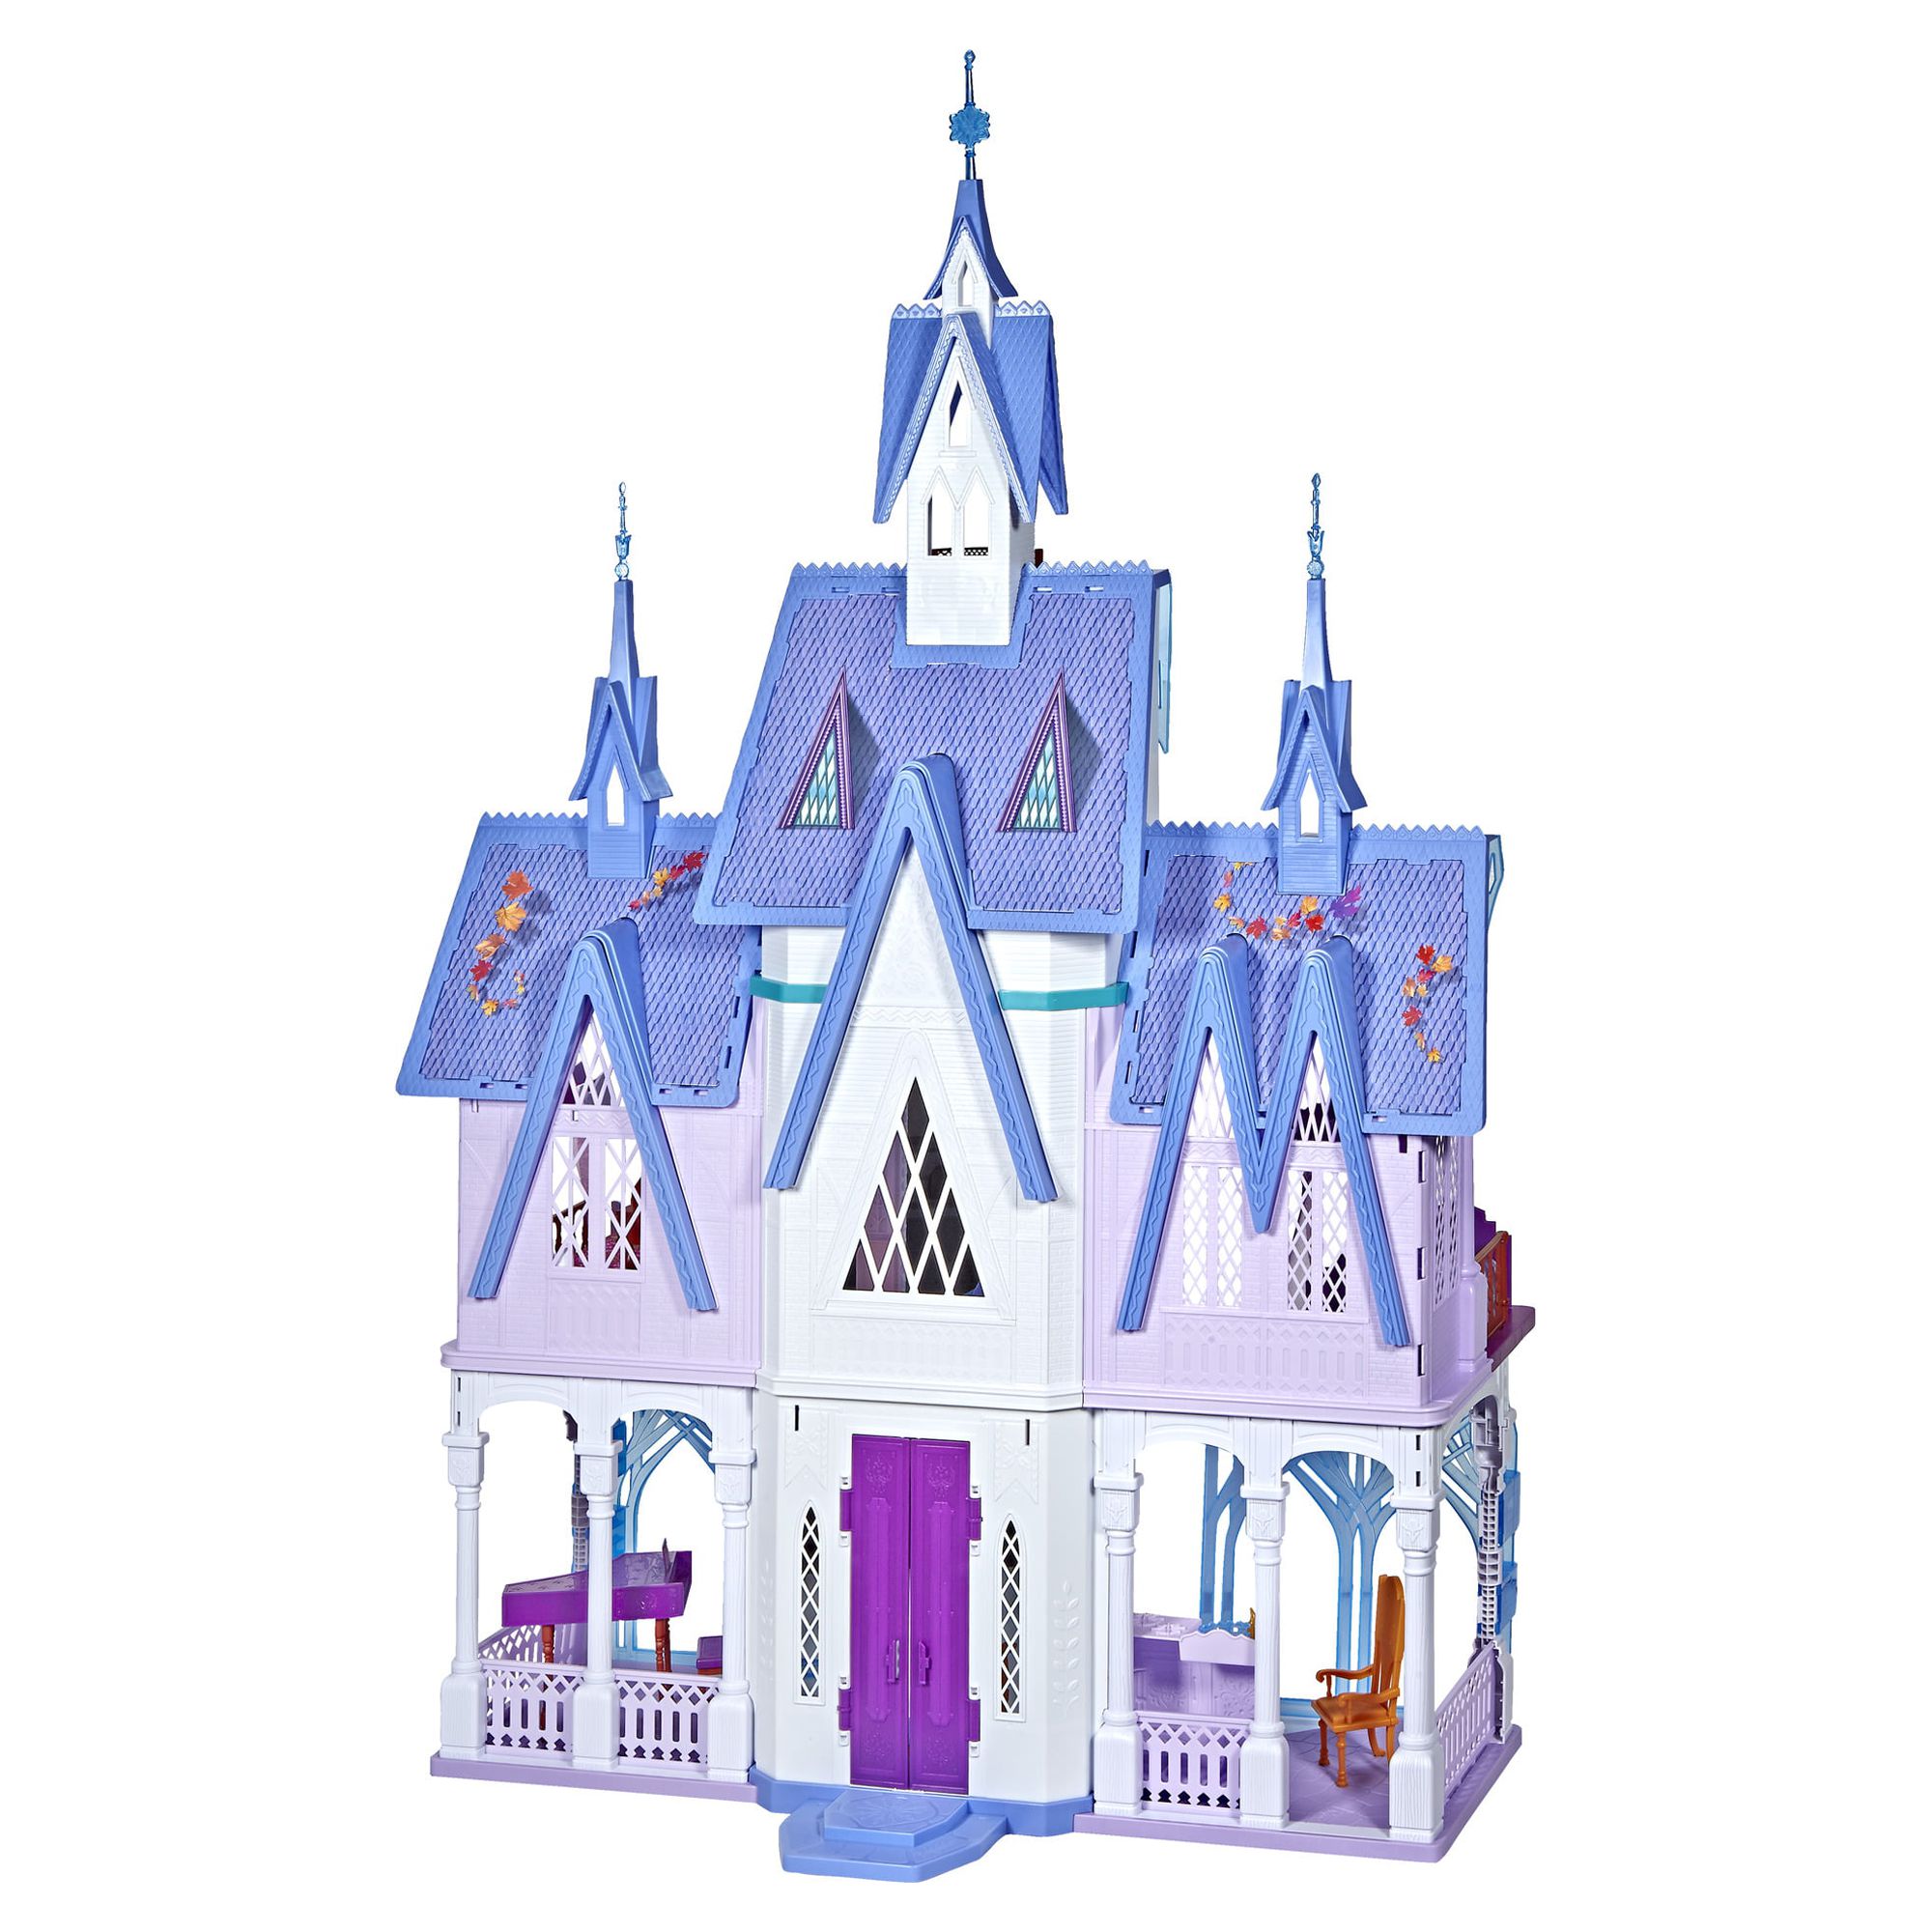 Disney Frozen 2 Ultimate Arendelle Castle Playset, Lights, Moving Balcony, 5x4 Ft. - image 2 of 26